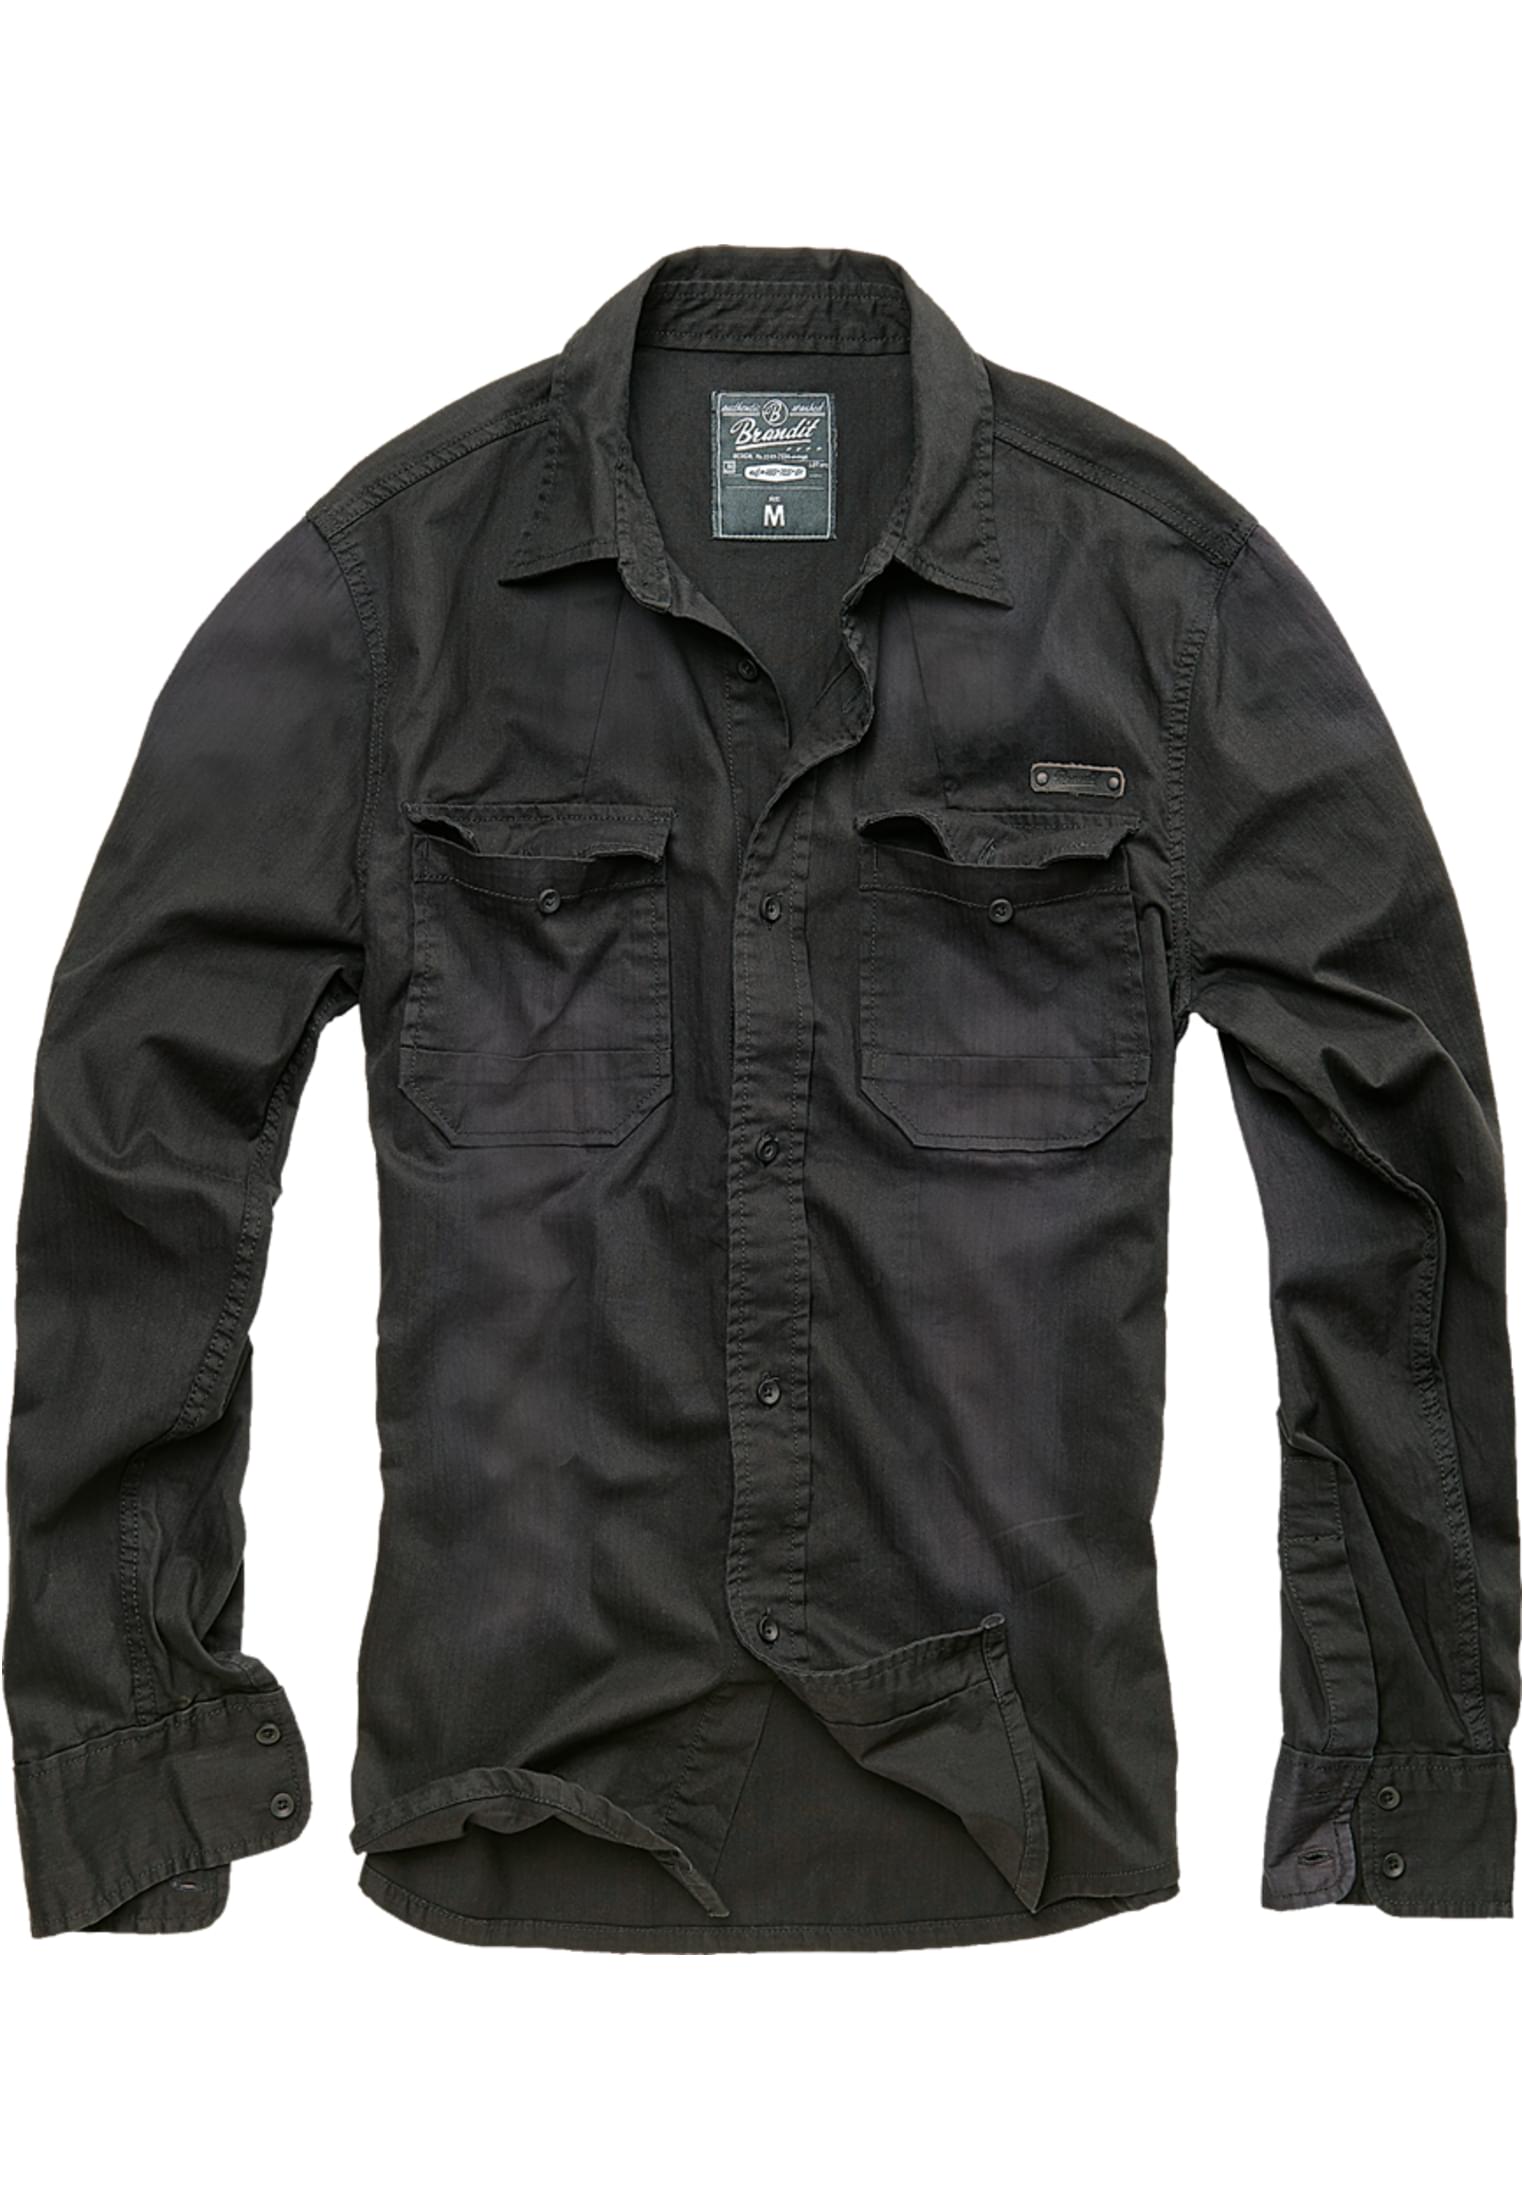 Hemden Hardee Denim Shirt in Farbe black